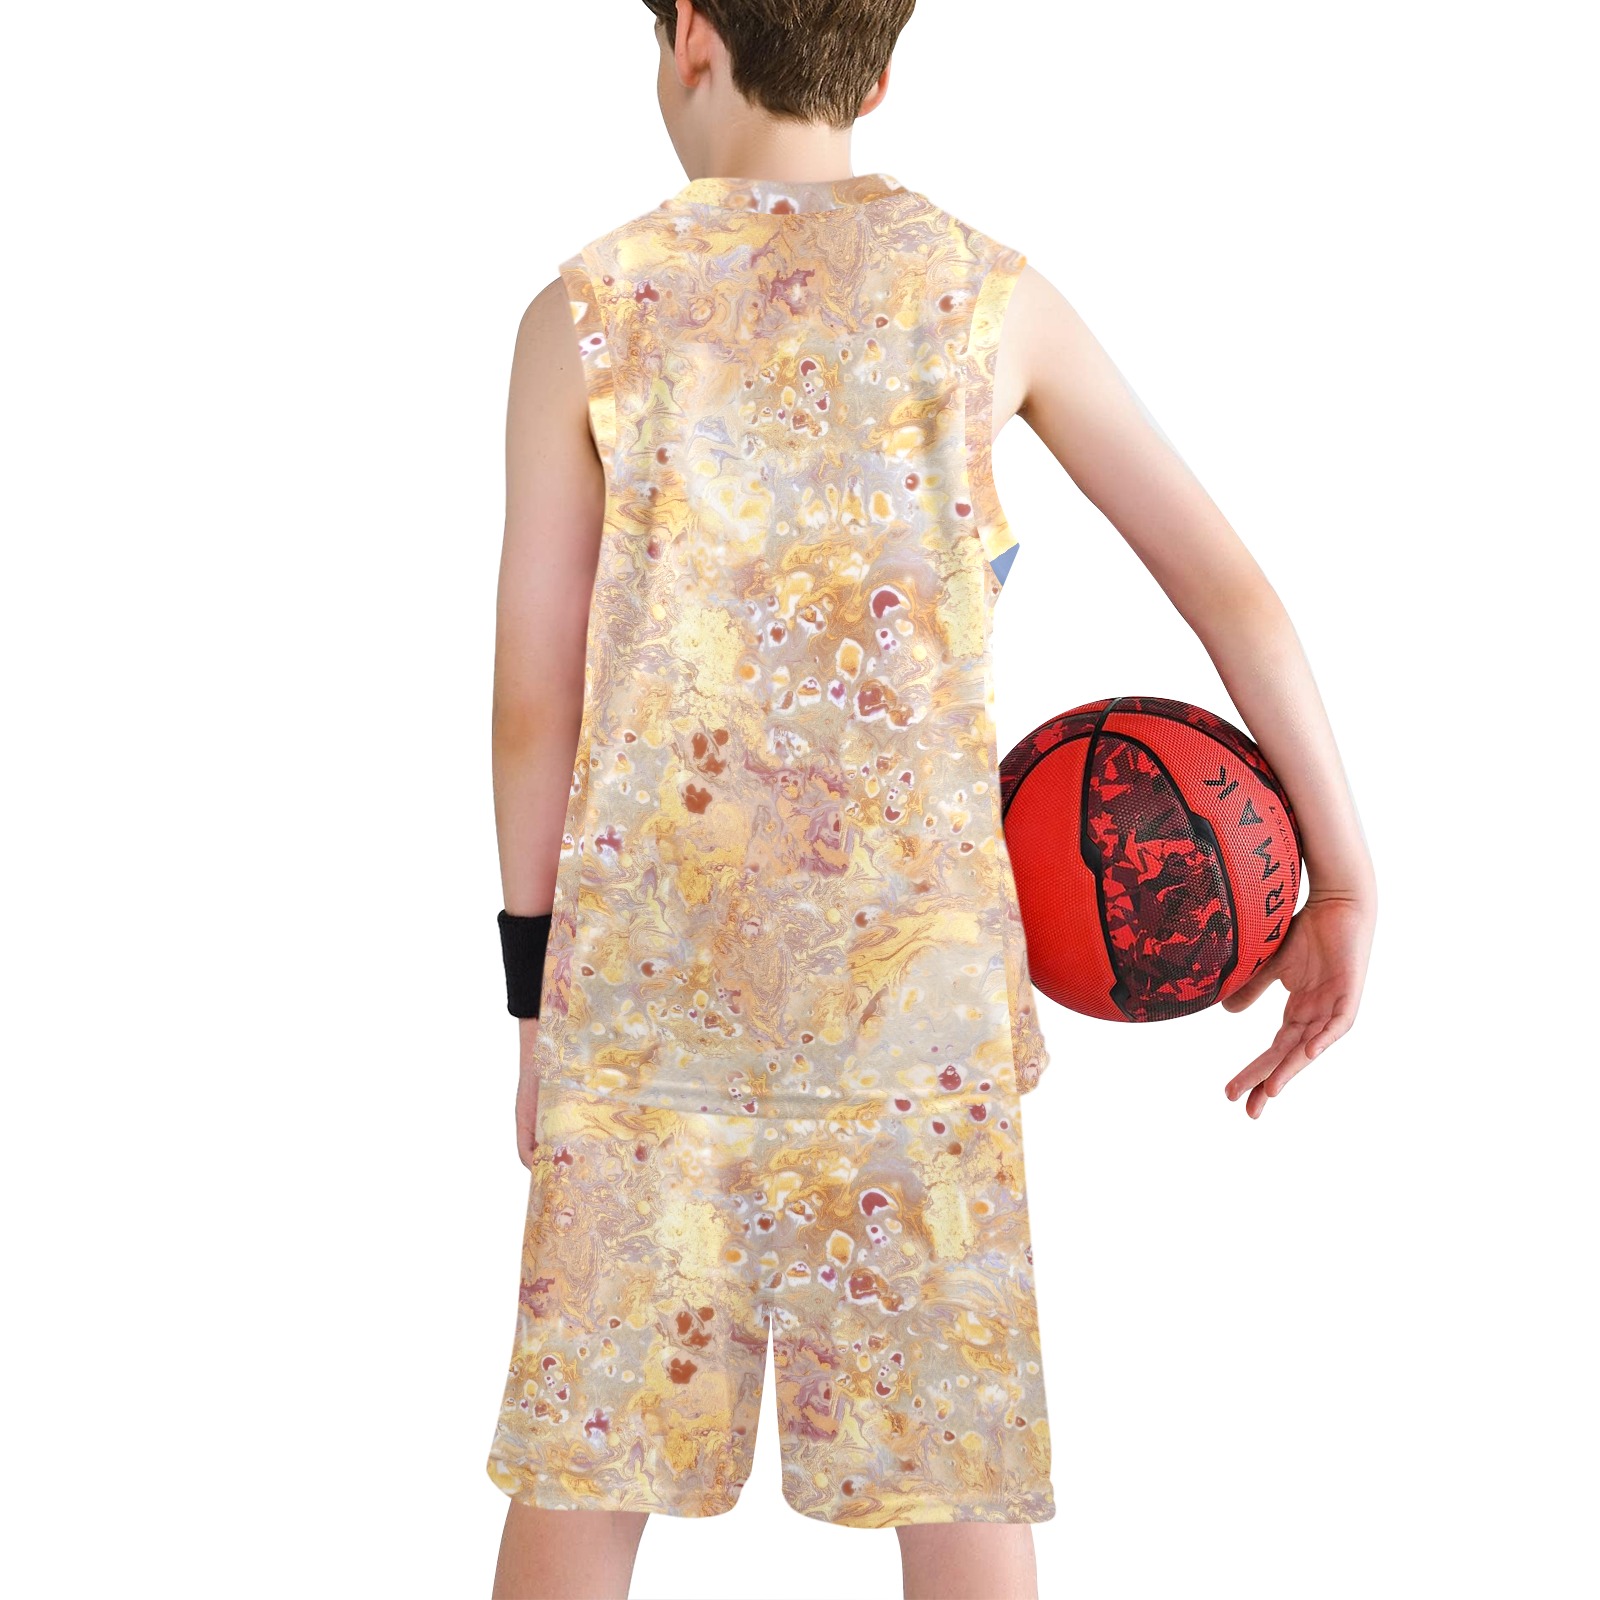 marbling 8-3 Boys' V-Neck Basketball Uniform